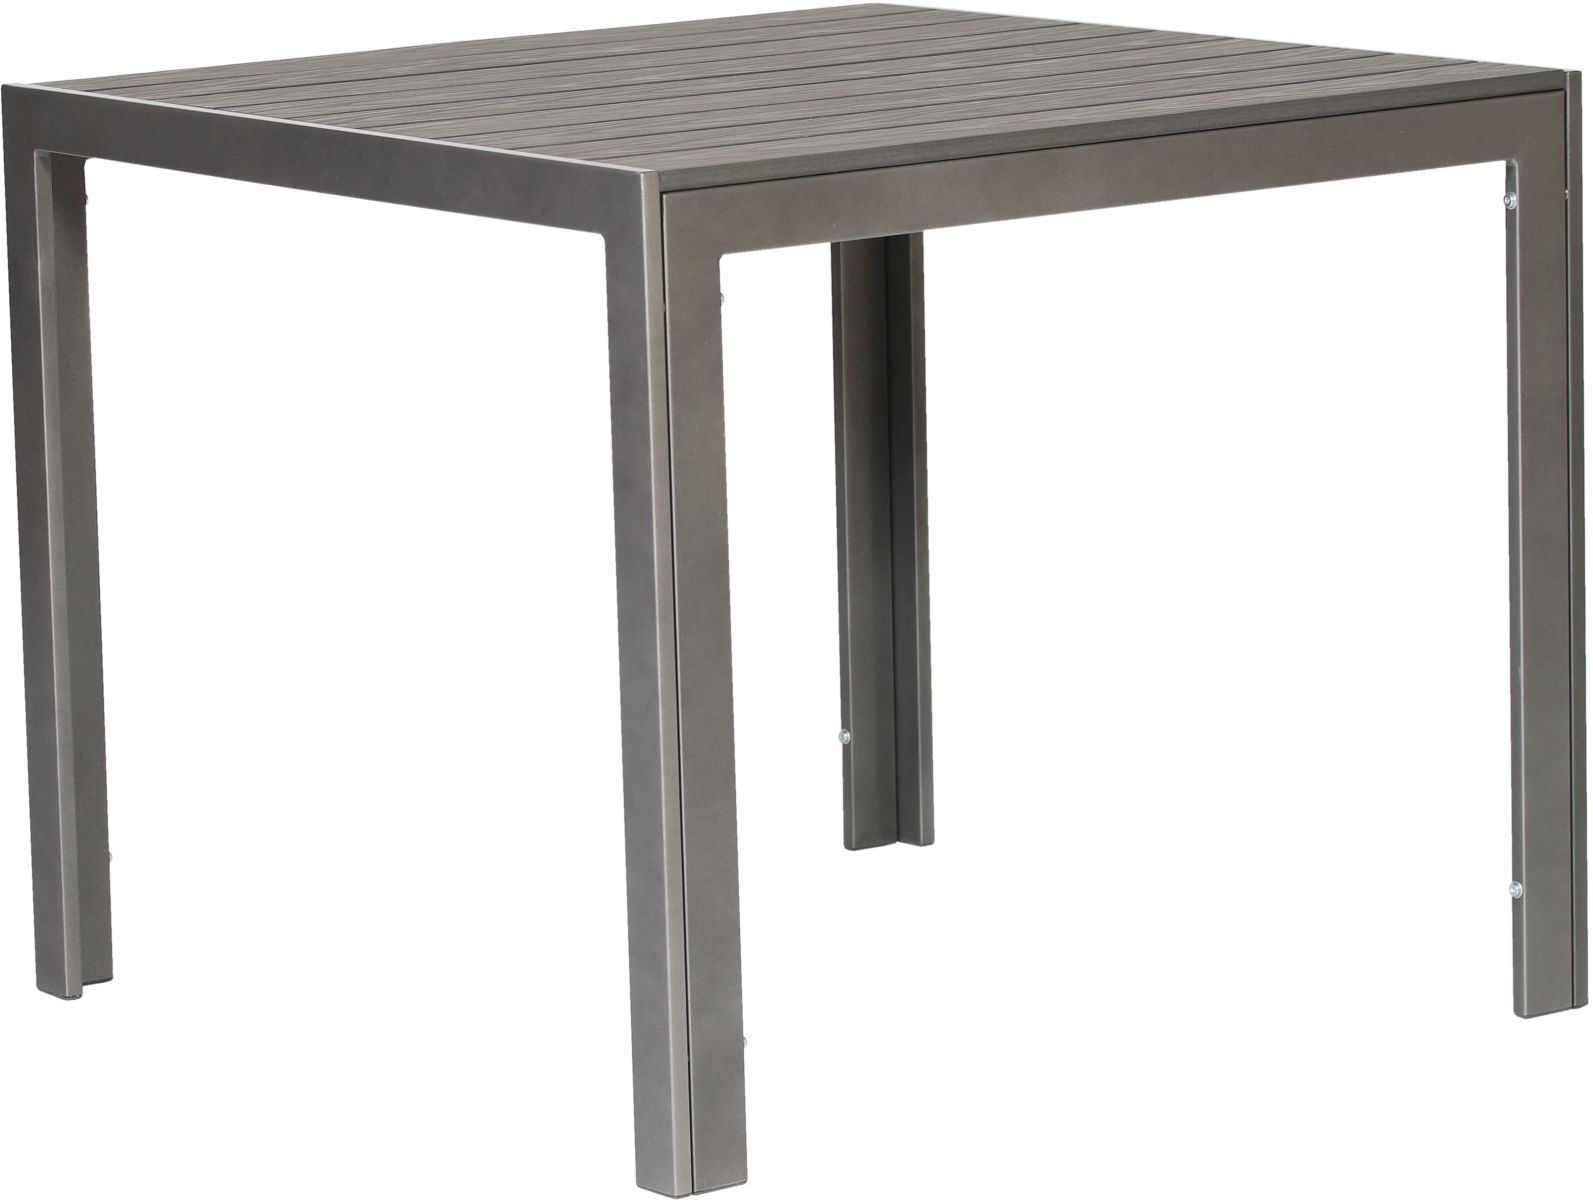 Table 90 x 90 cm ROA-730201456